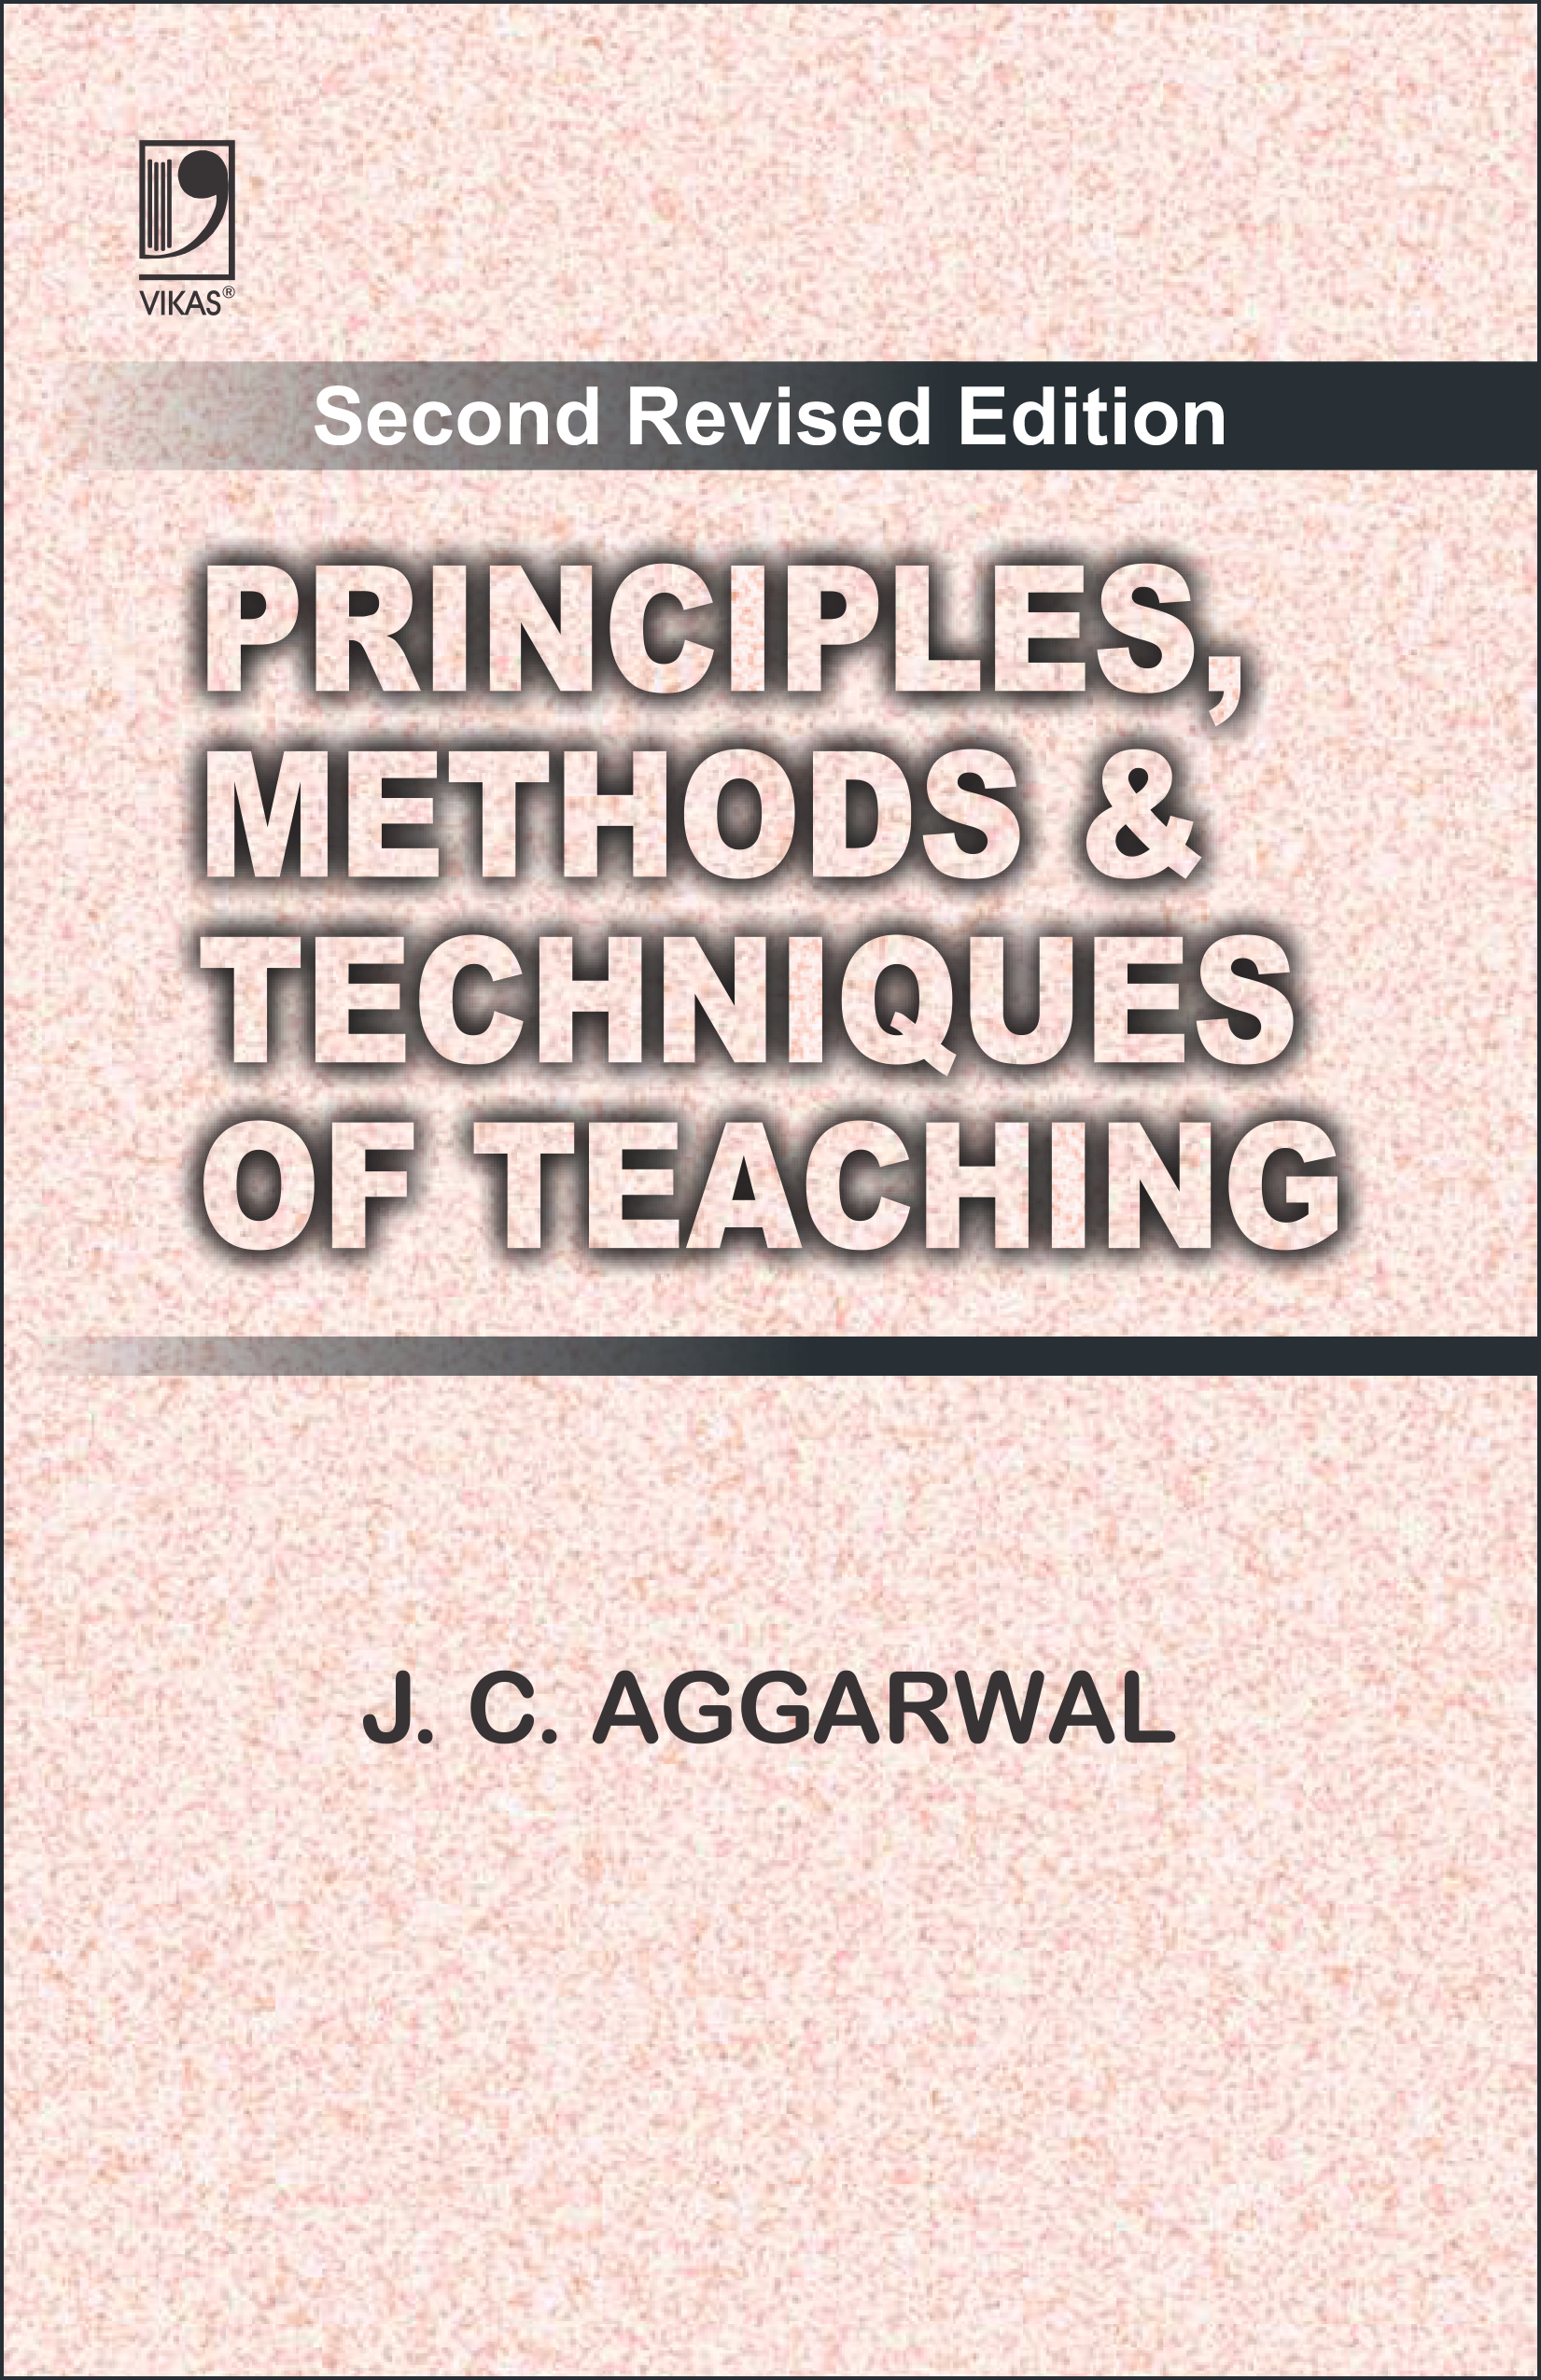 Principles, Methods & Techniques of Teaching